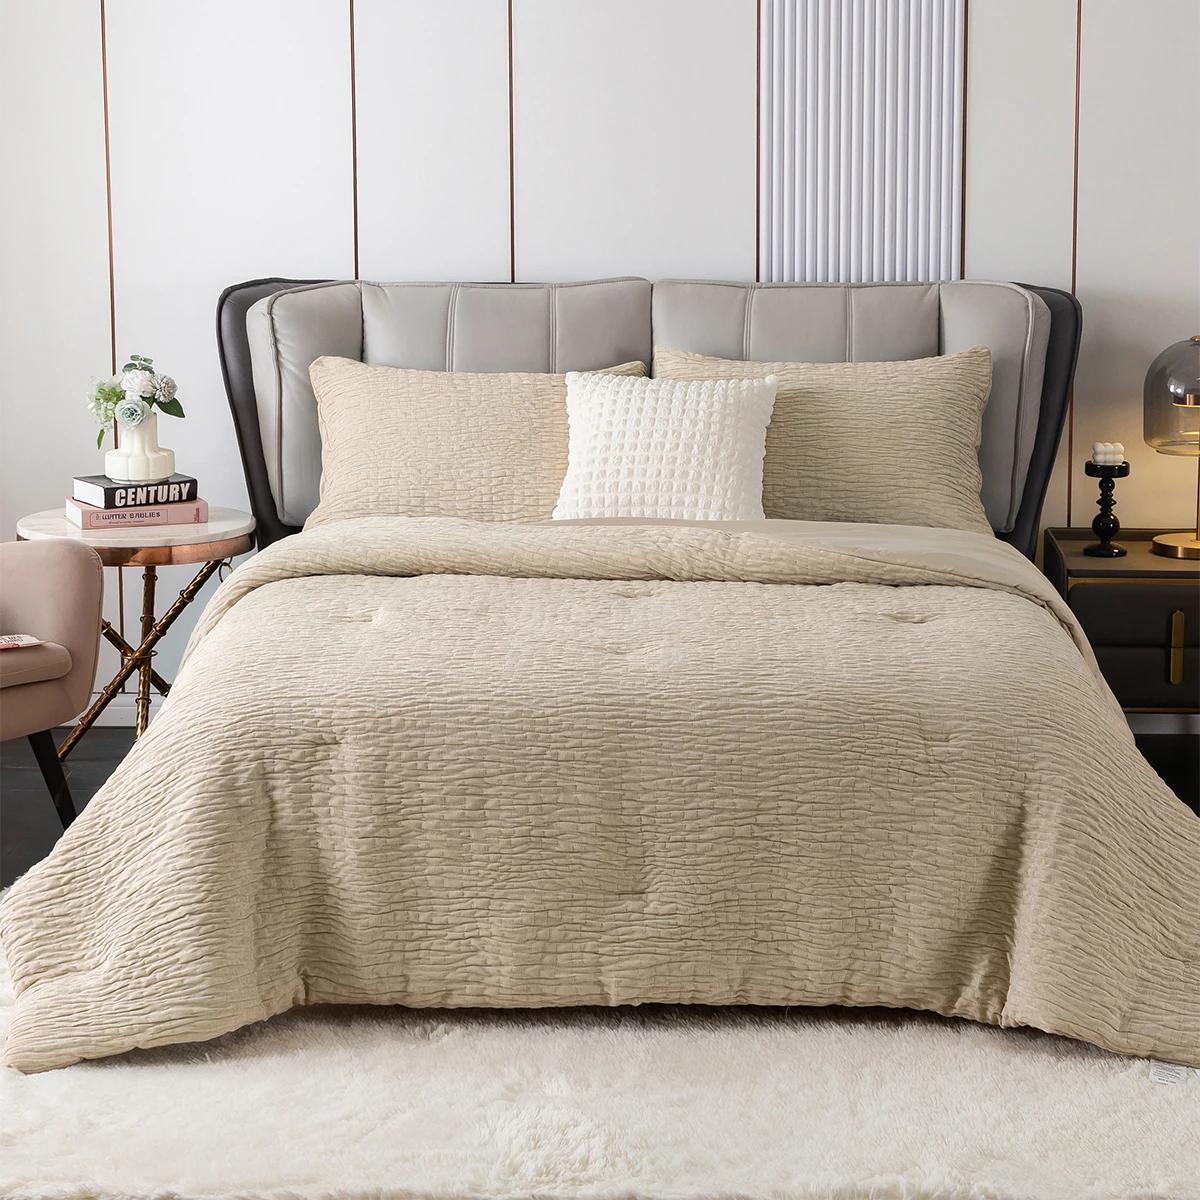 

Reversible Chenille Cotton Full Size Comforter Set,Luxury Textured Stripe Soft Lightweight Bedding 3pcs-Champagne Gold